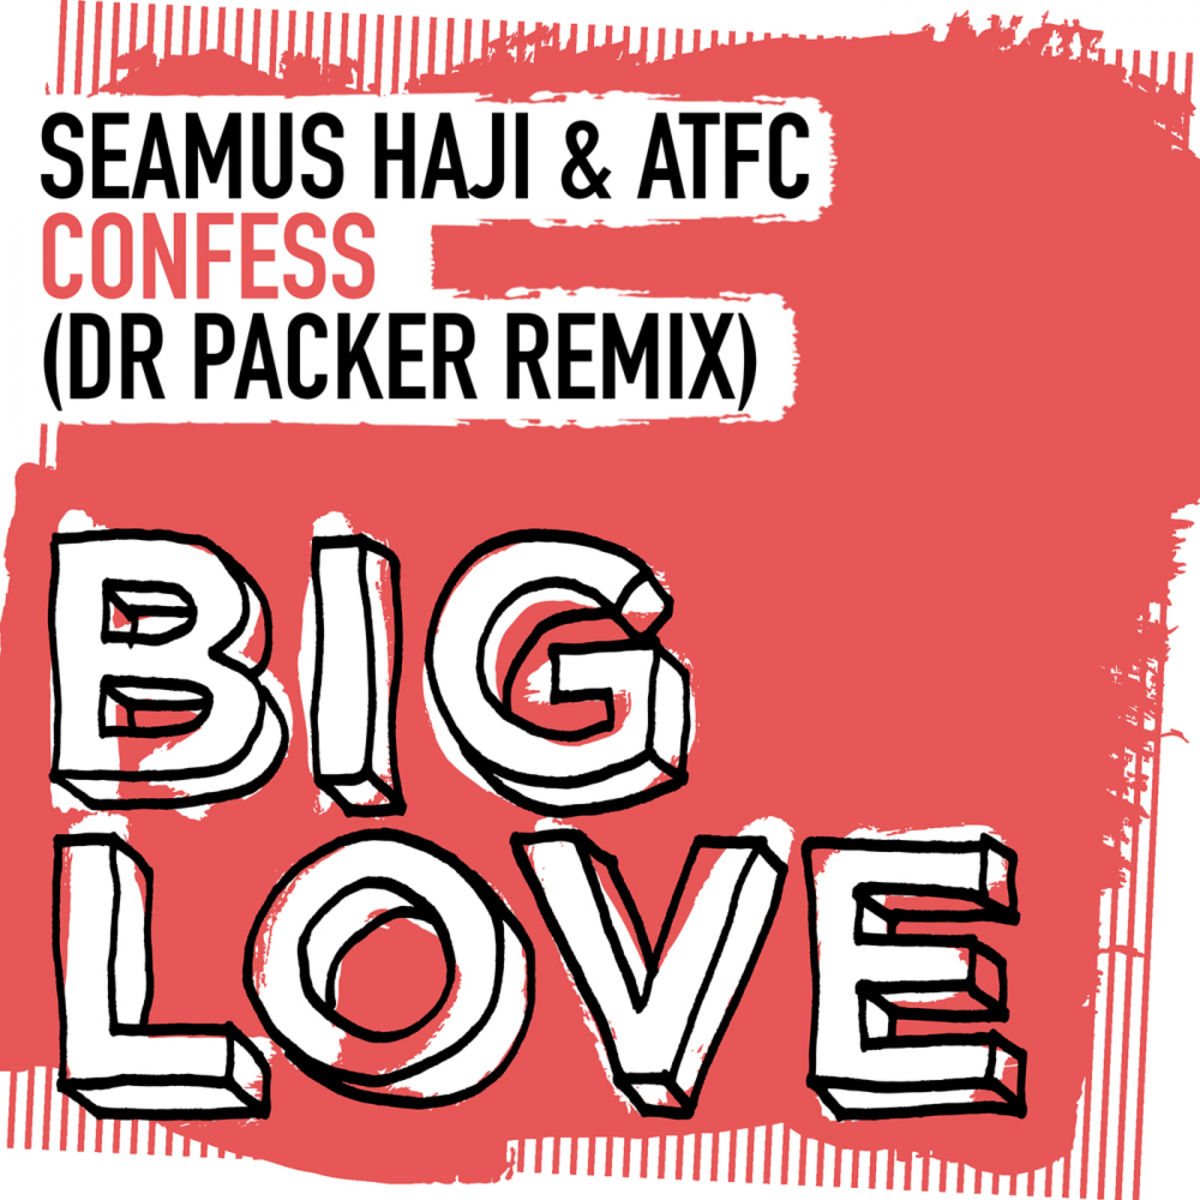 Seamus Haji & ATFC - Confess (Dr Packer Remix) / Big Love Music